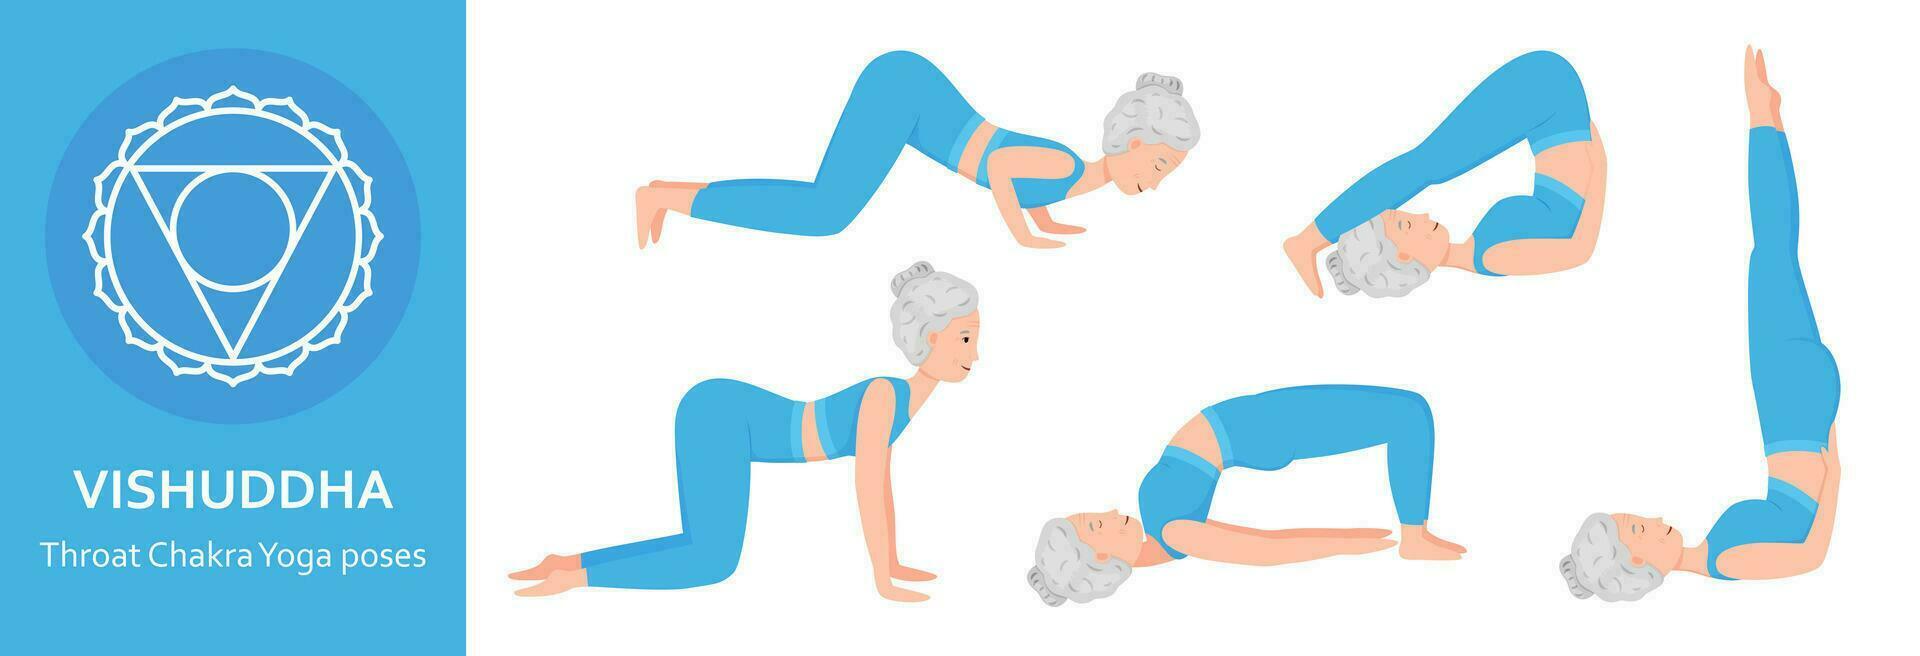 garganta chakra yoga posa mayor mujer practicando vishudha chakra yoga asanas sano estilo de vida. plano dibujos animados personaje. vector ilustración